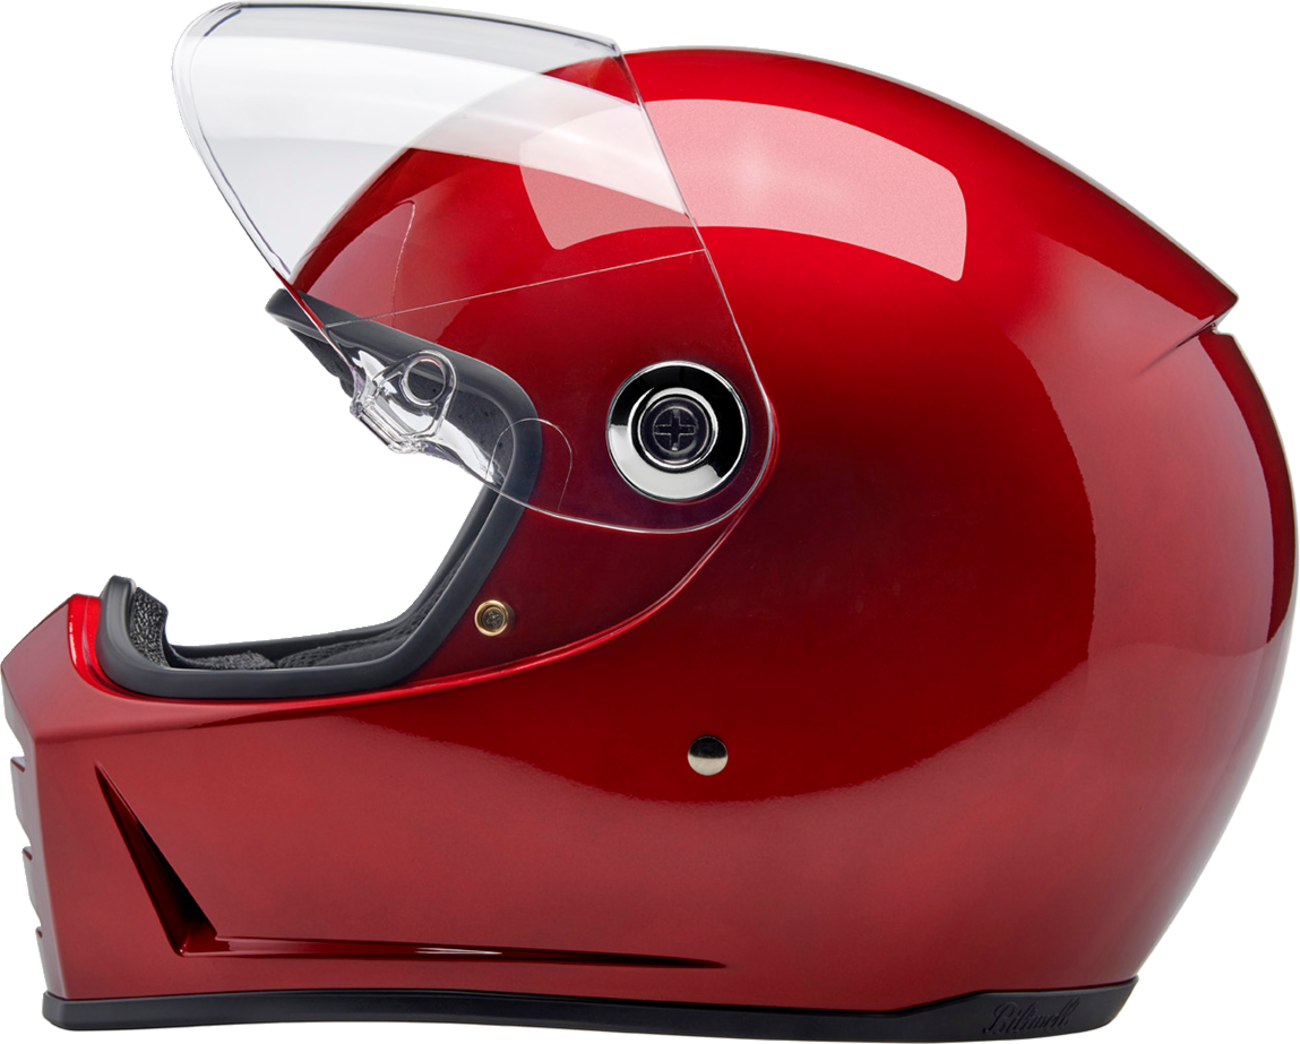 BILTWELL Lane Splitter Helmet - Metallic Cherry Red - XL 1004-351-505